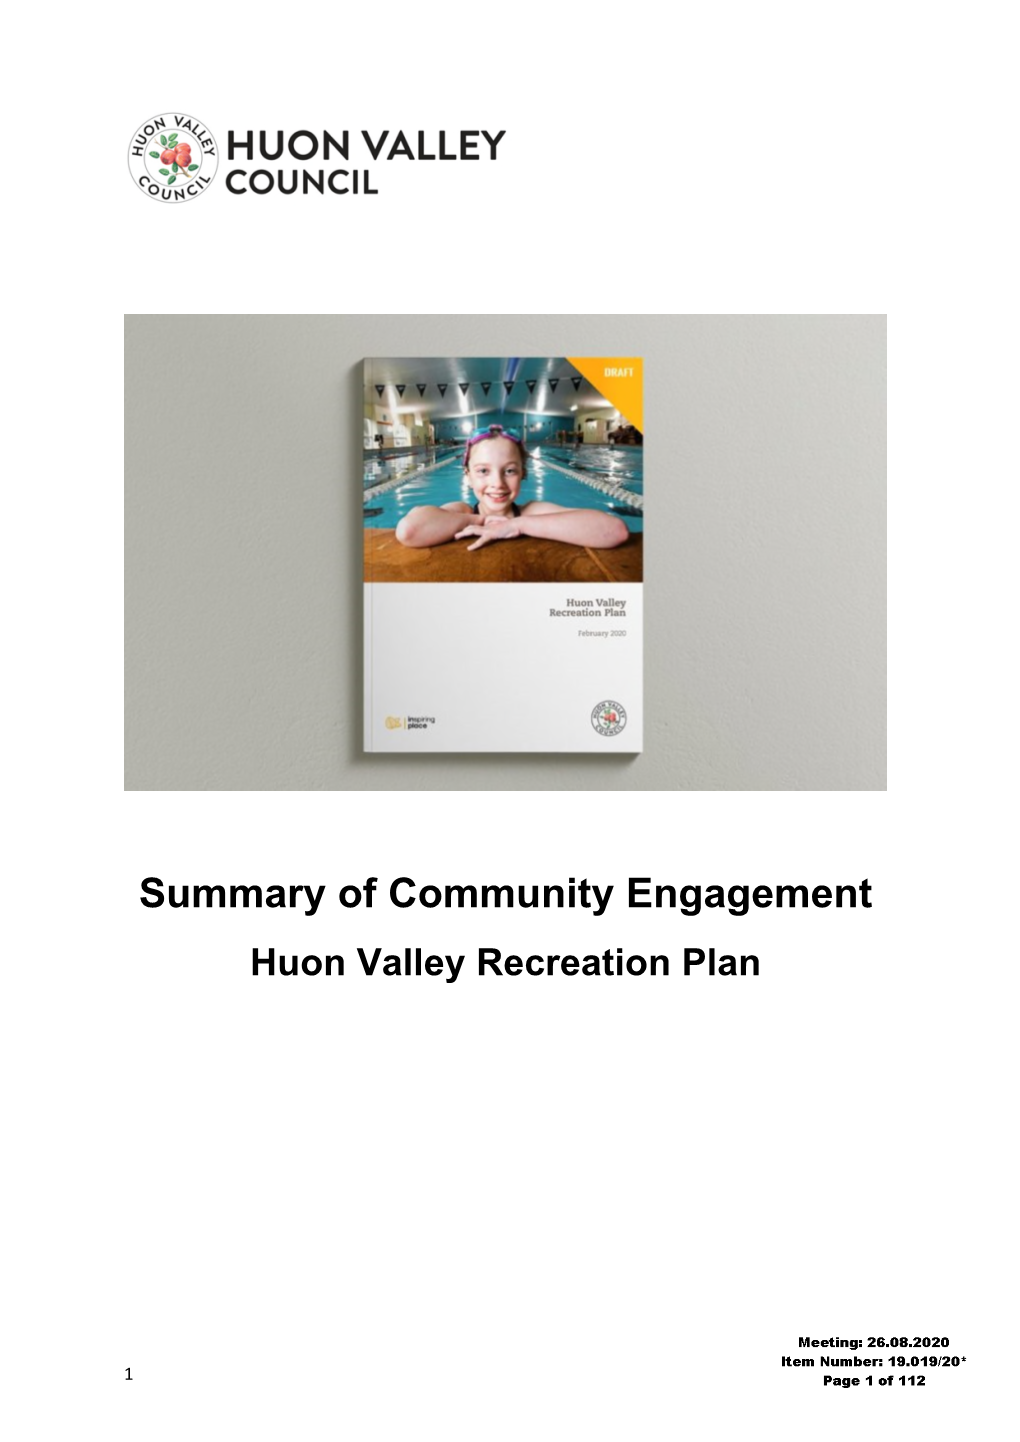 Summary of Community Engagement Huon Valley Recreation Plan